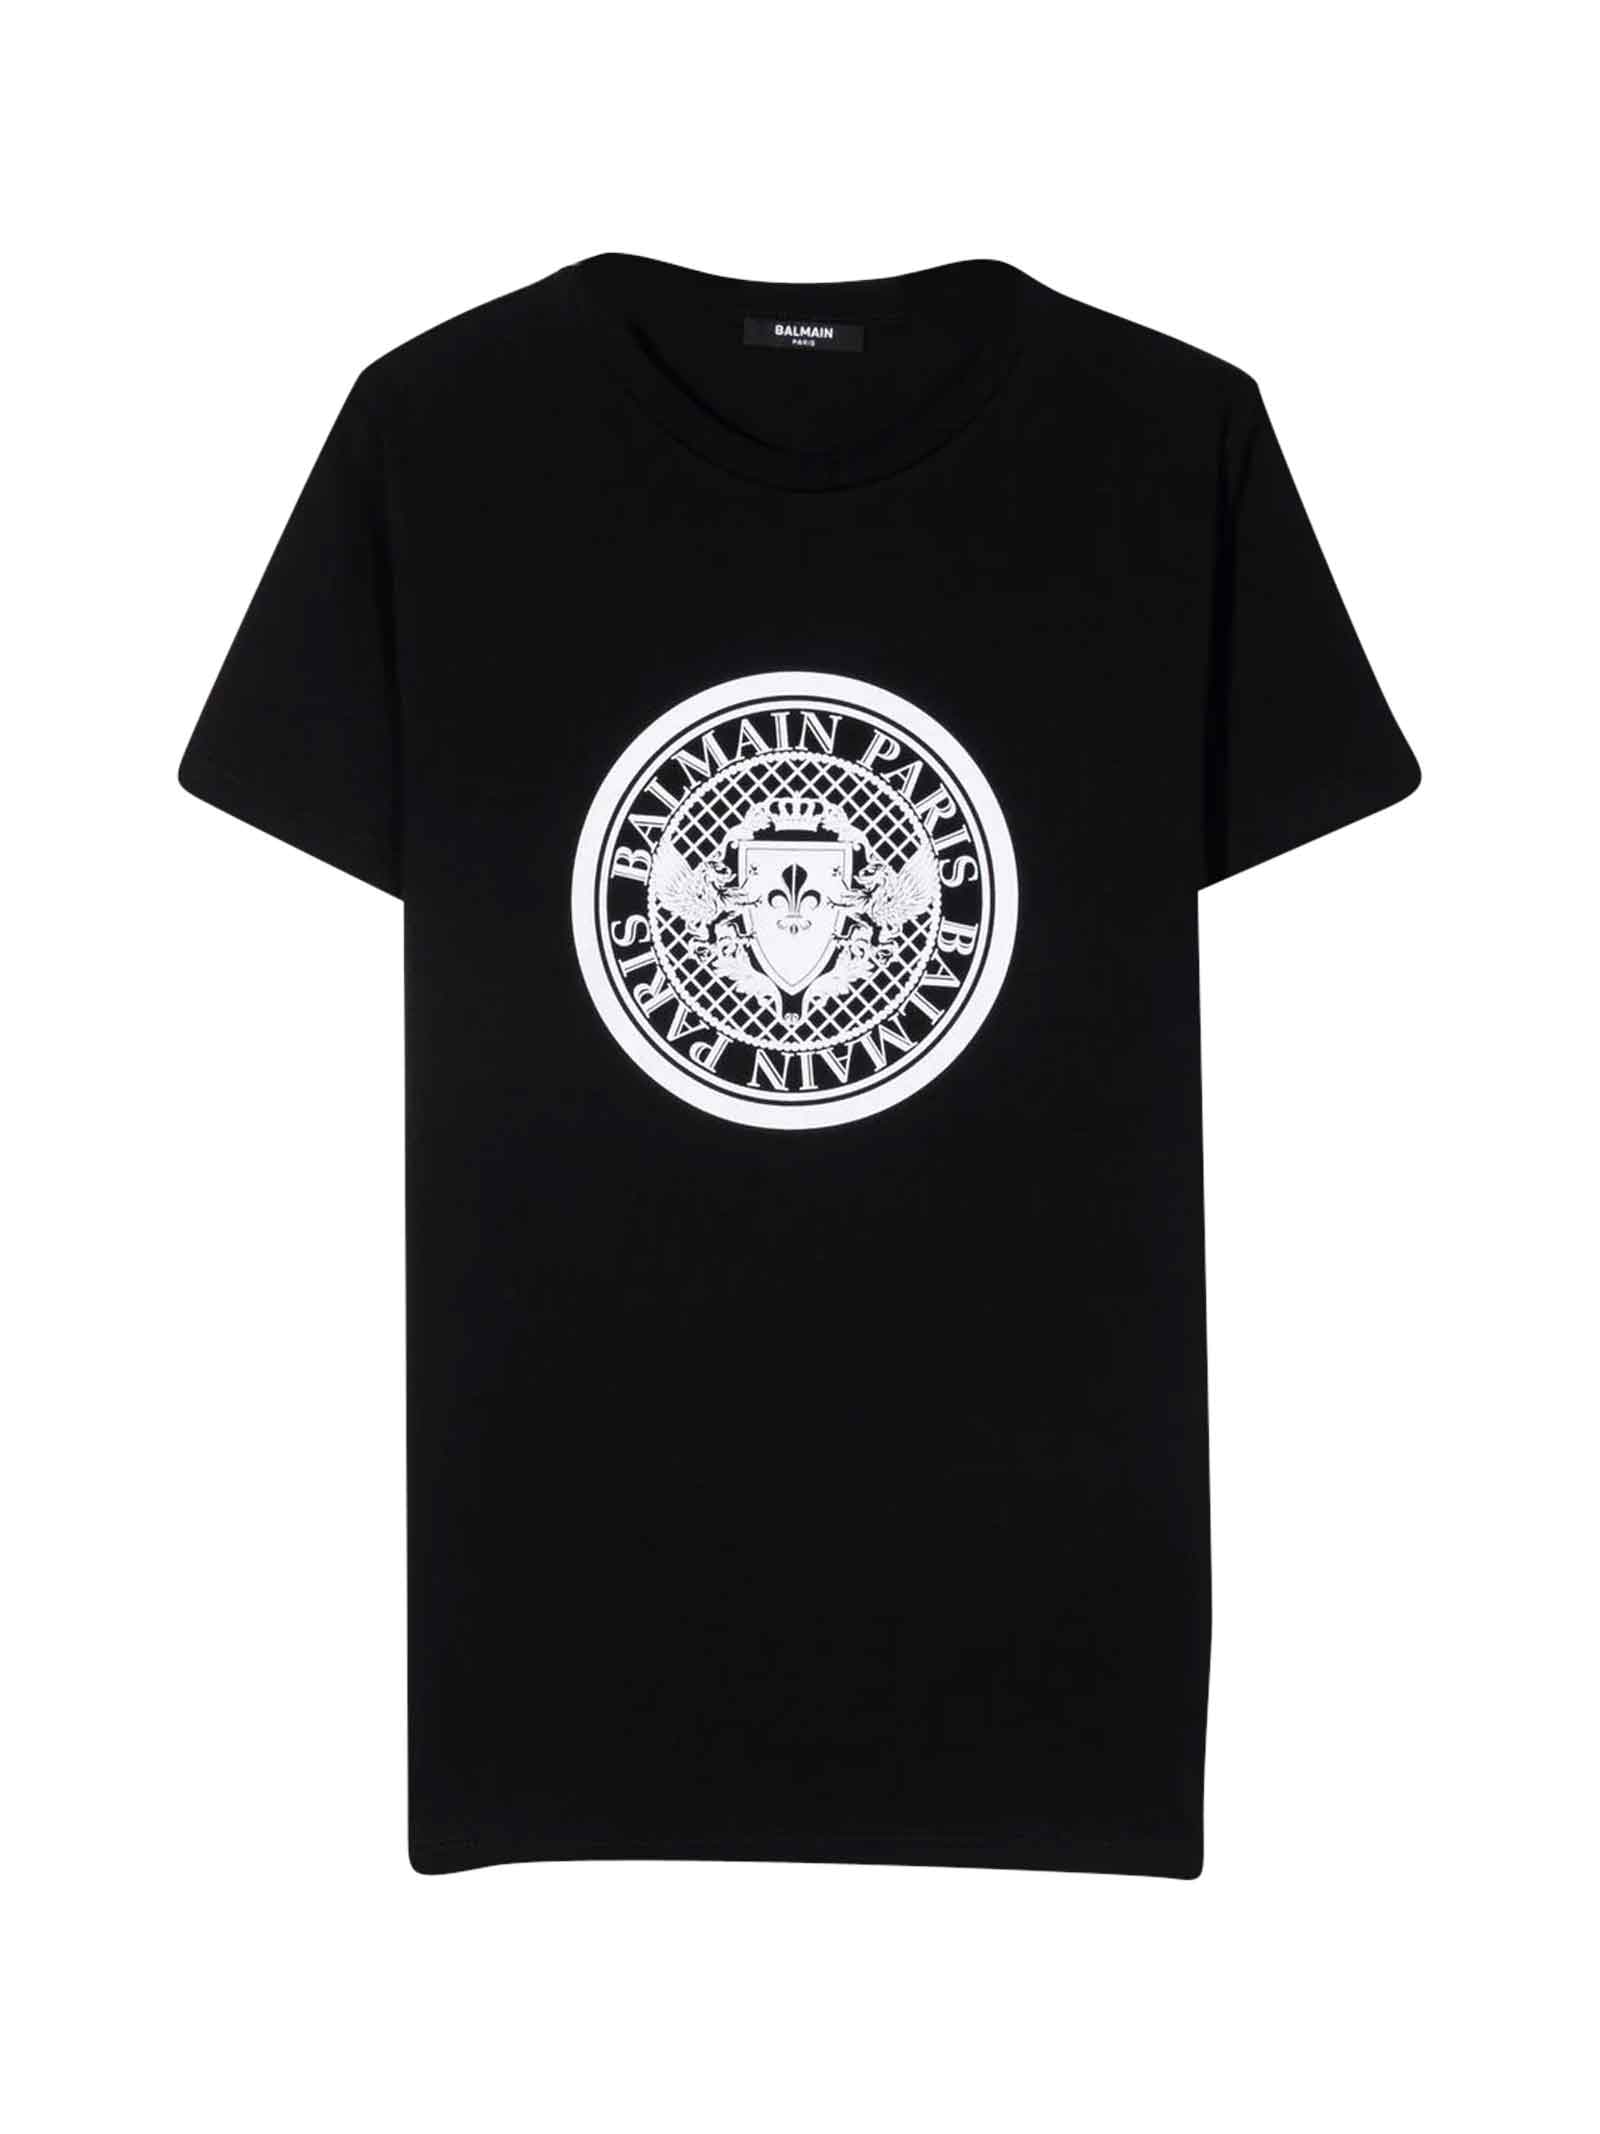 Balmain Black T-shirt Teen Unisex